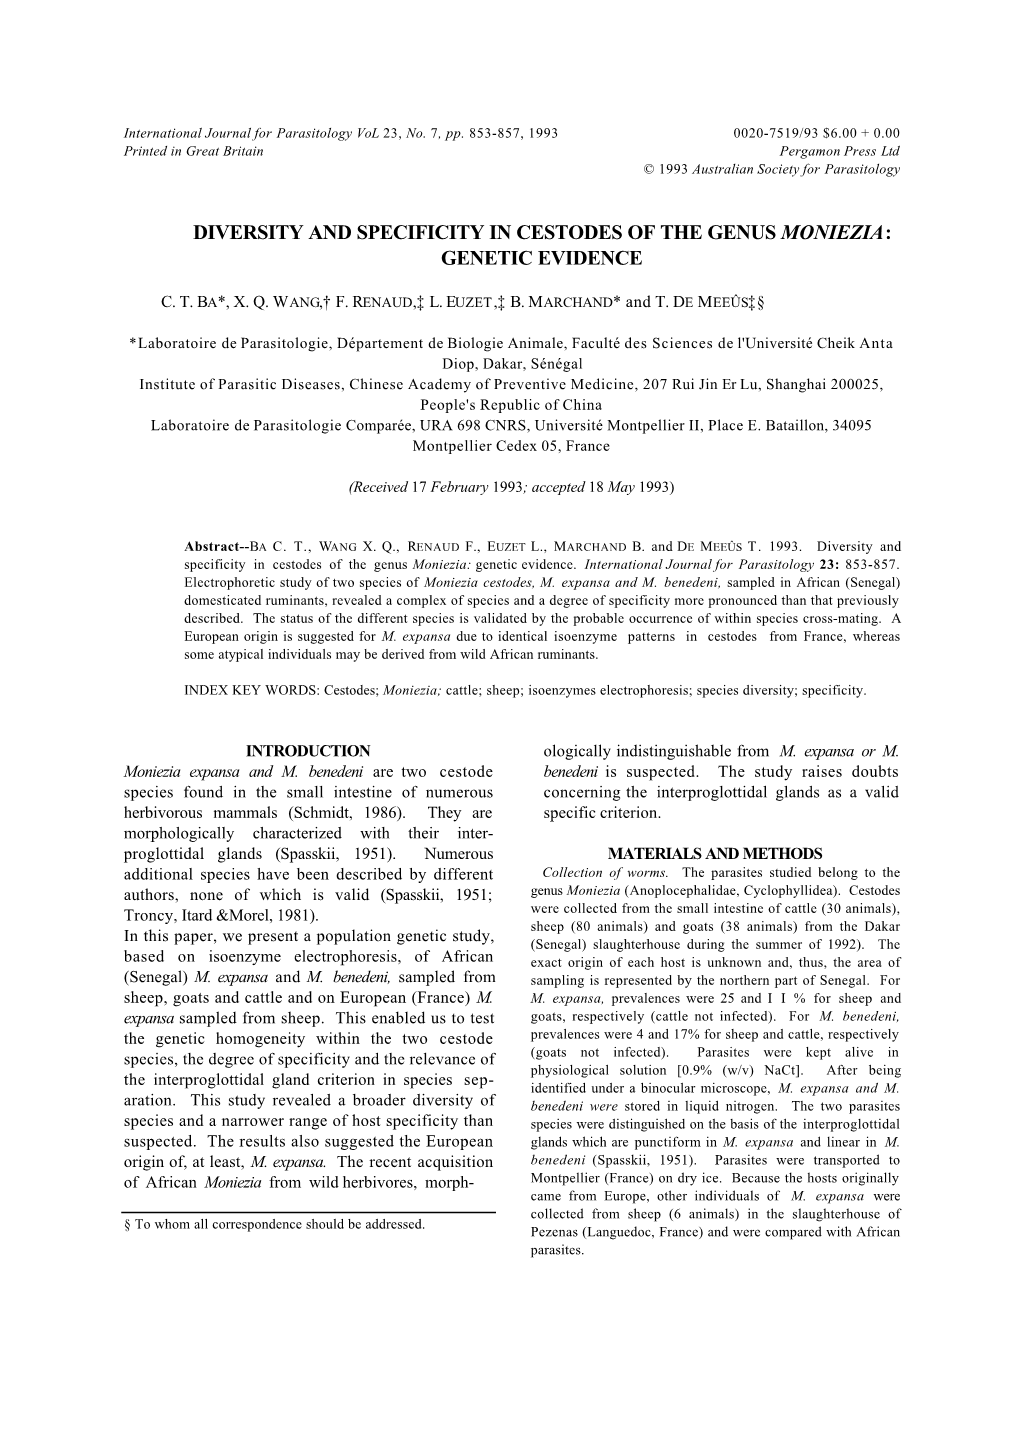 Diversity and Specificity in Cestodes of the Genus Moniezia: Genetic Evidence